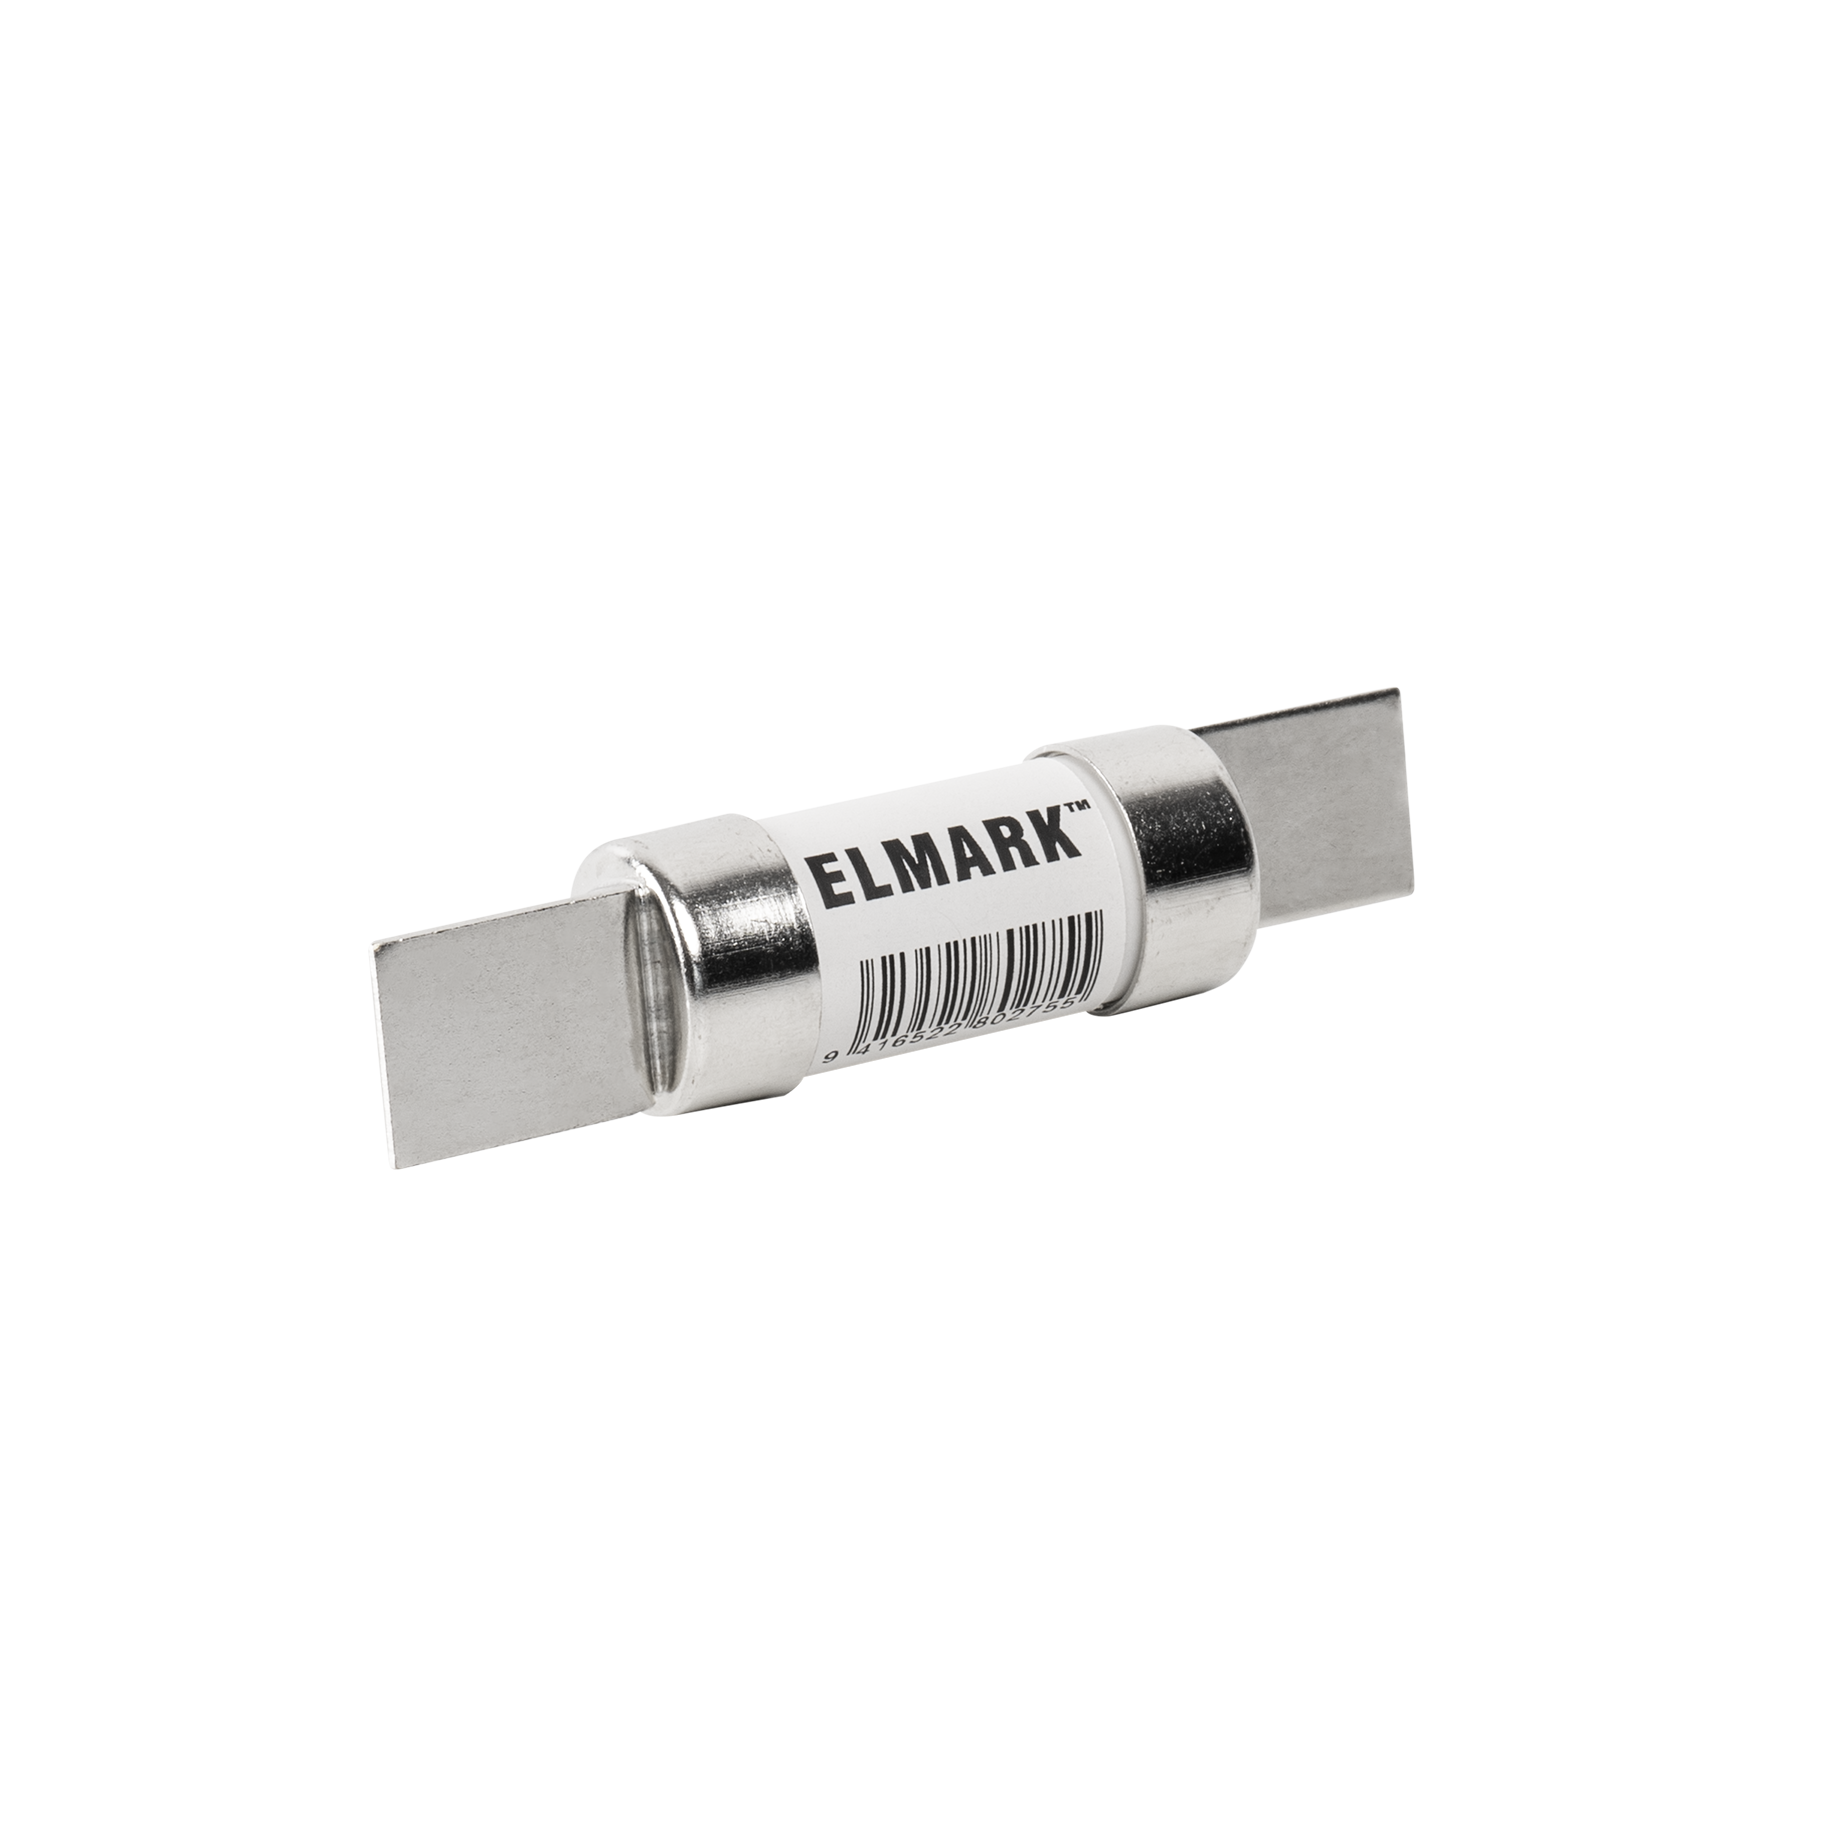 ELMARK HRC FUSE LINK STAGGERED TAG 20A 550V 20G06